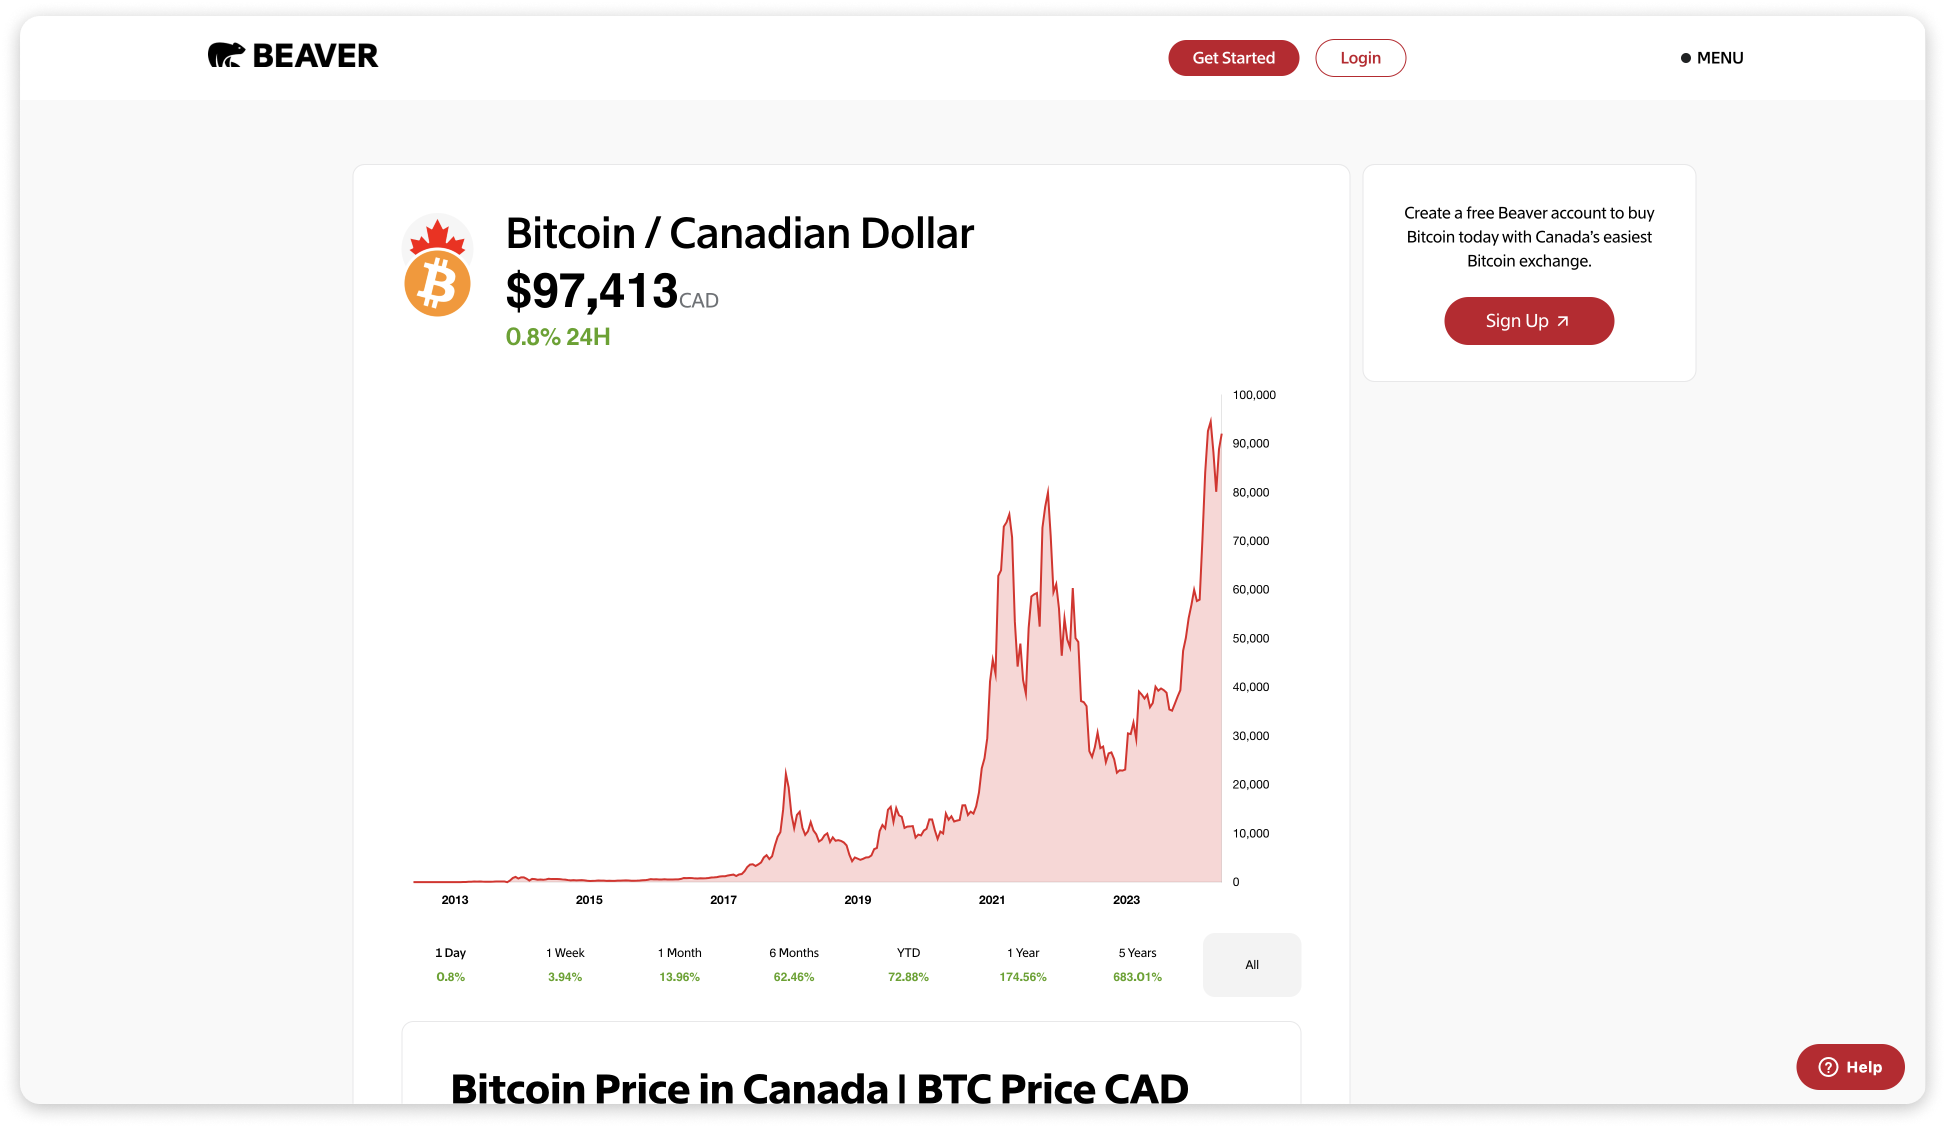 Beaver's Bitcoin Price Page